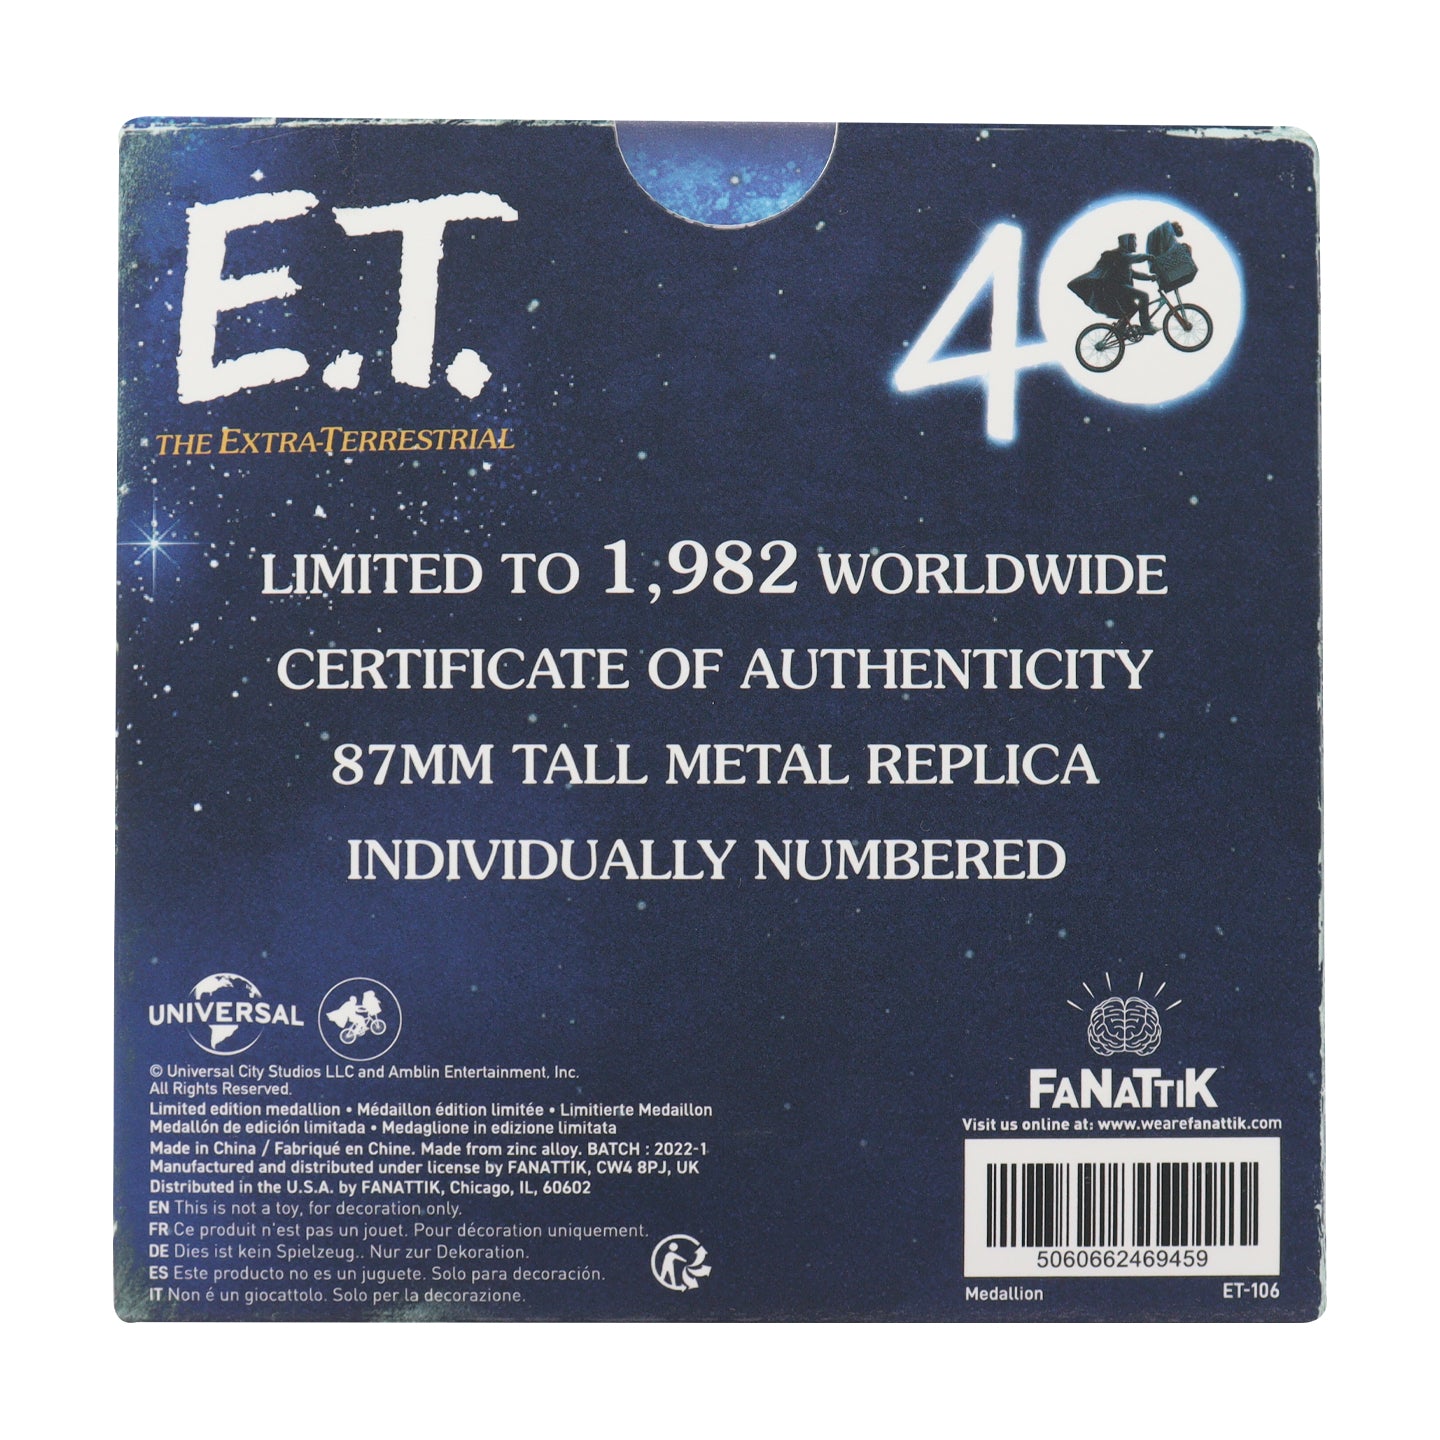 E.T. Limited Edition 40th Anniversary Replica Scaled Spaceship